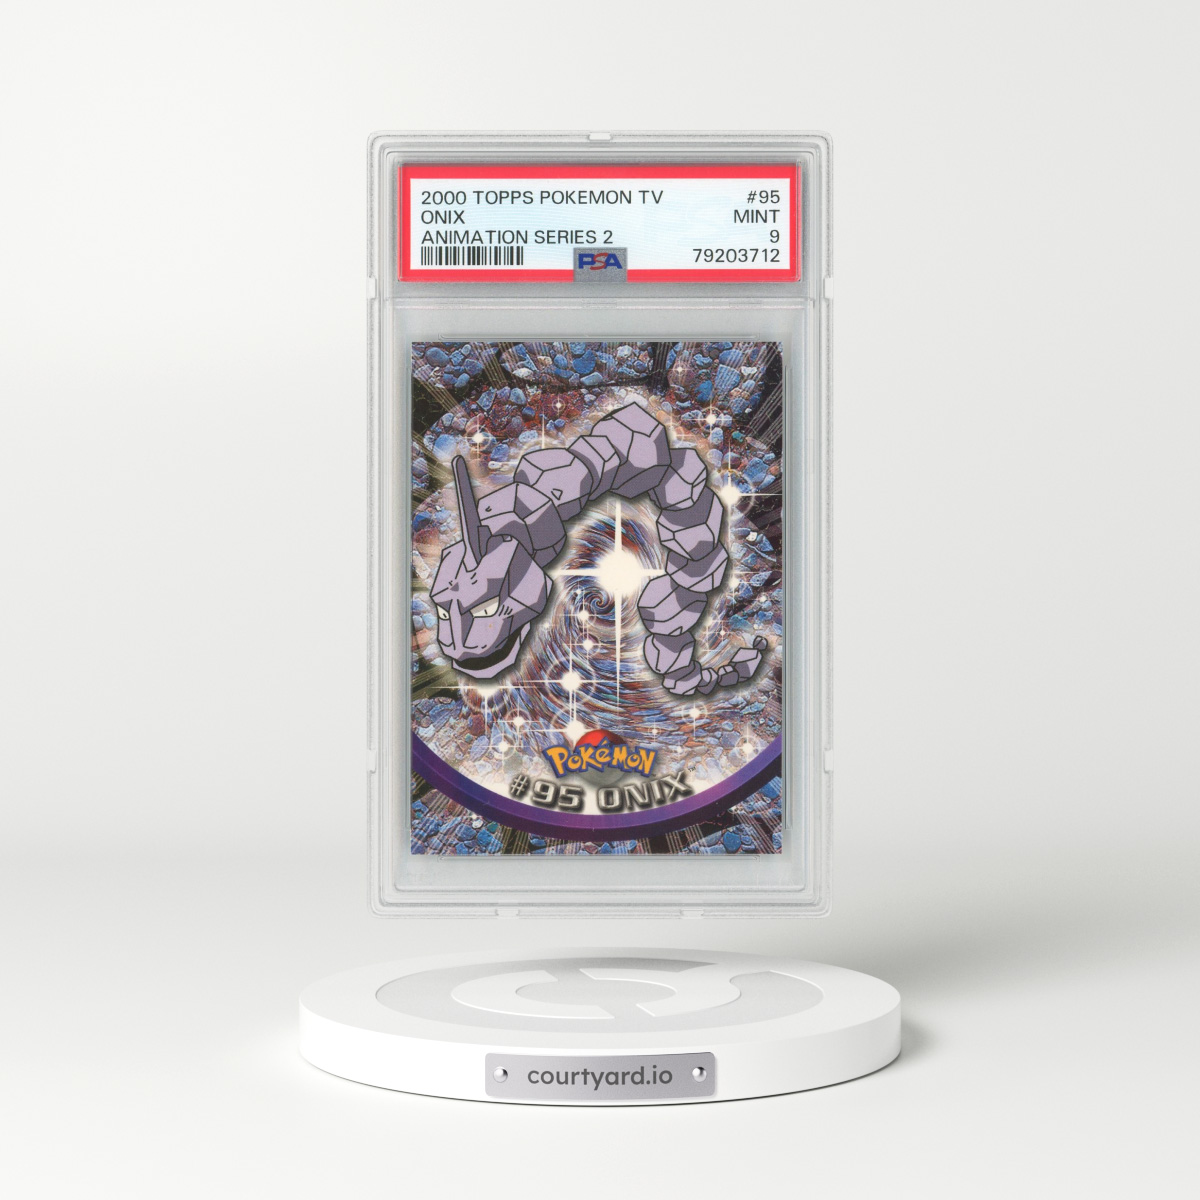 Pokemon Card - #95 Onix by Nova-Nebulas on DeviantArt